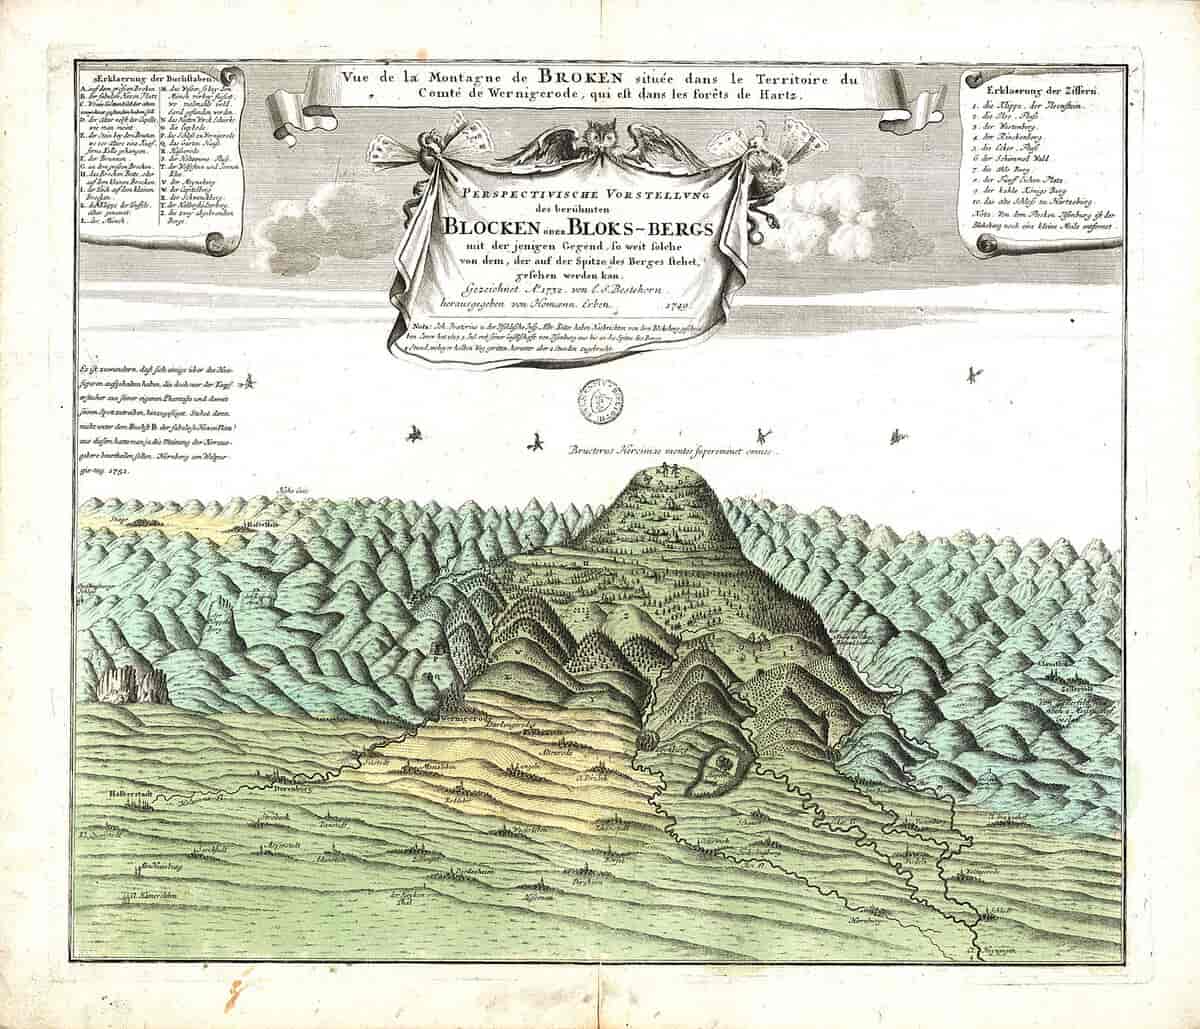 "Blocken oder Bloks-Bergs" (1749)